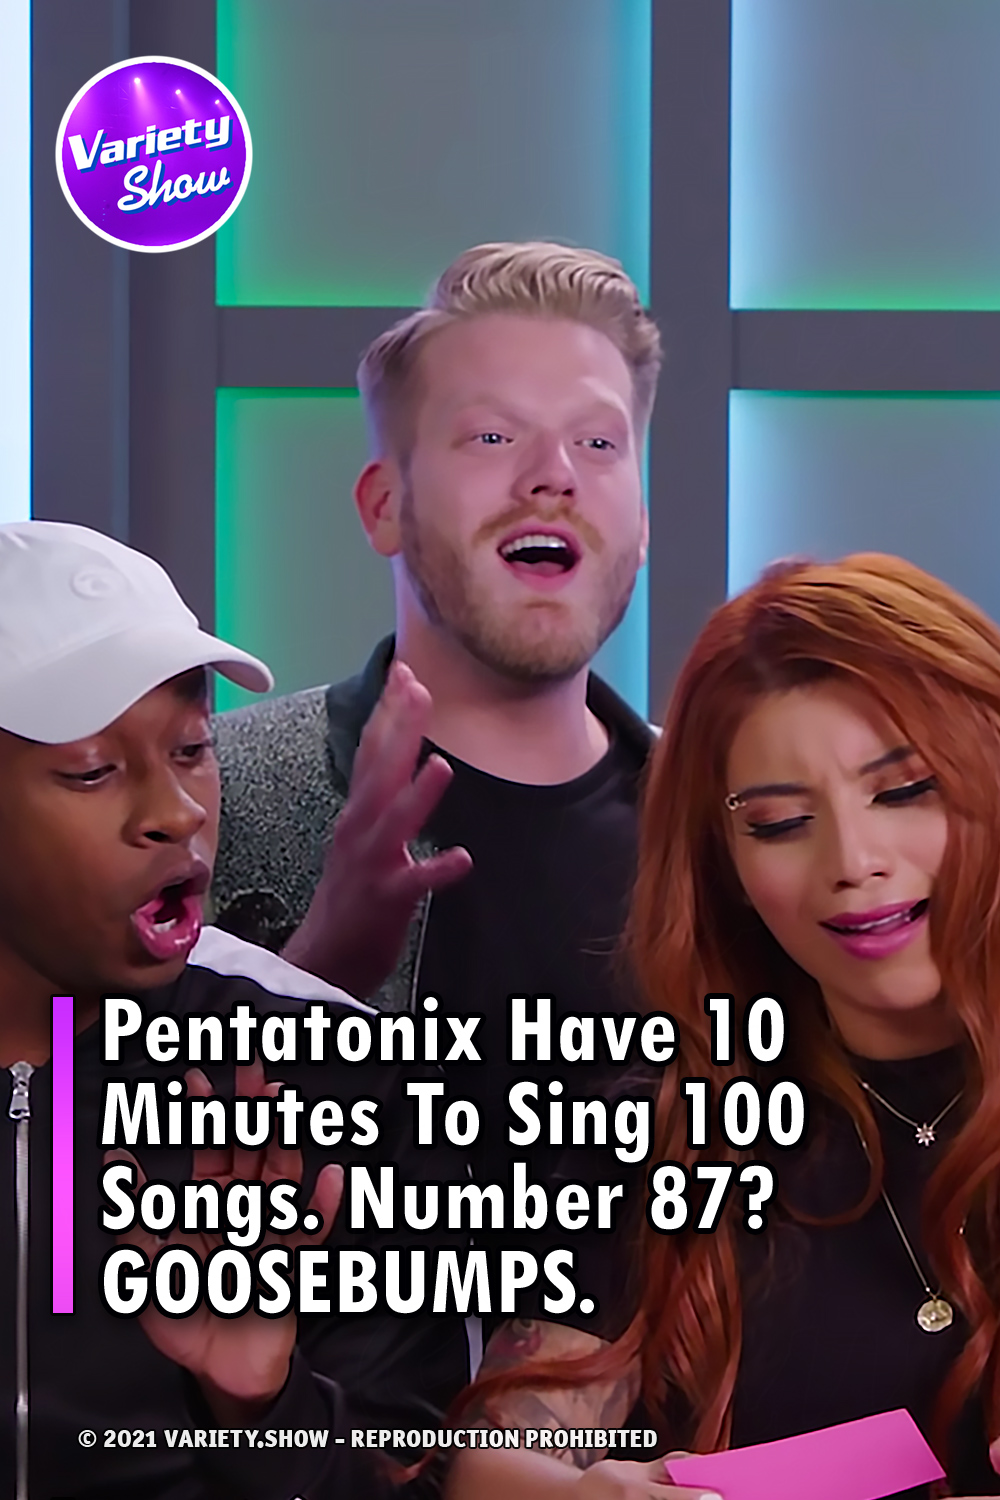 Pentatonix Have 10 Minutes To Sing 100 Songs. Number 87? GOOSEBUMPS.